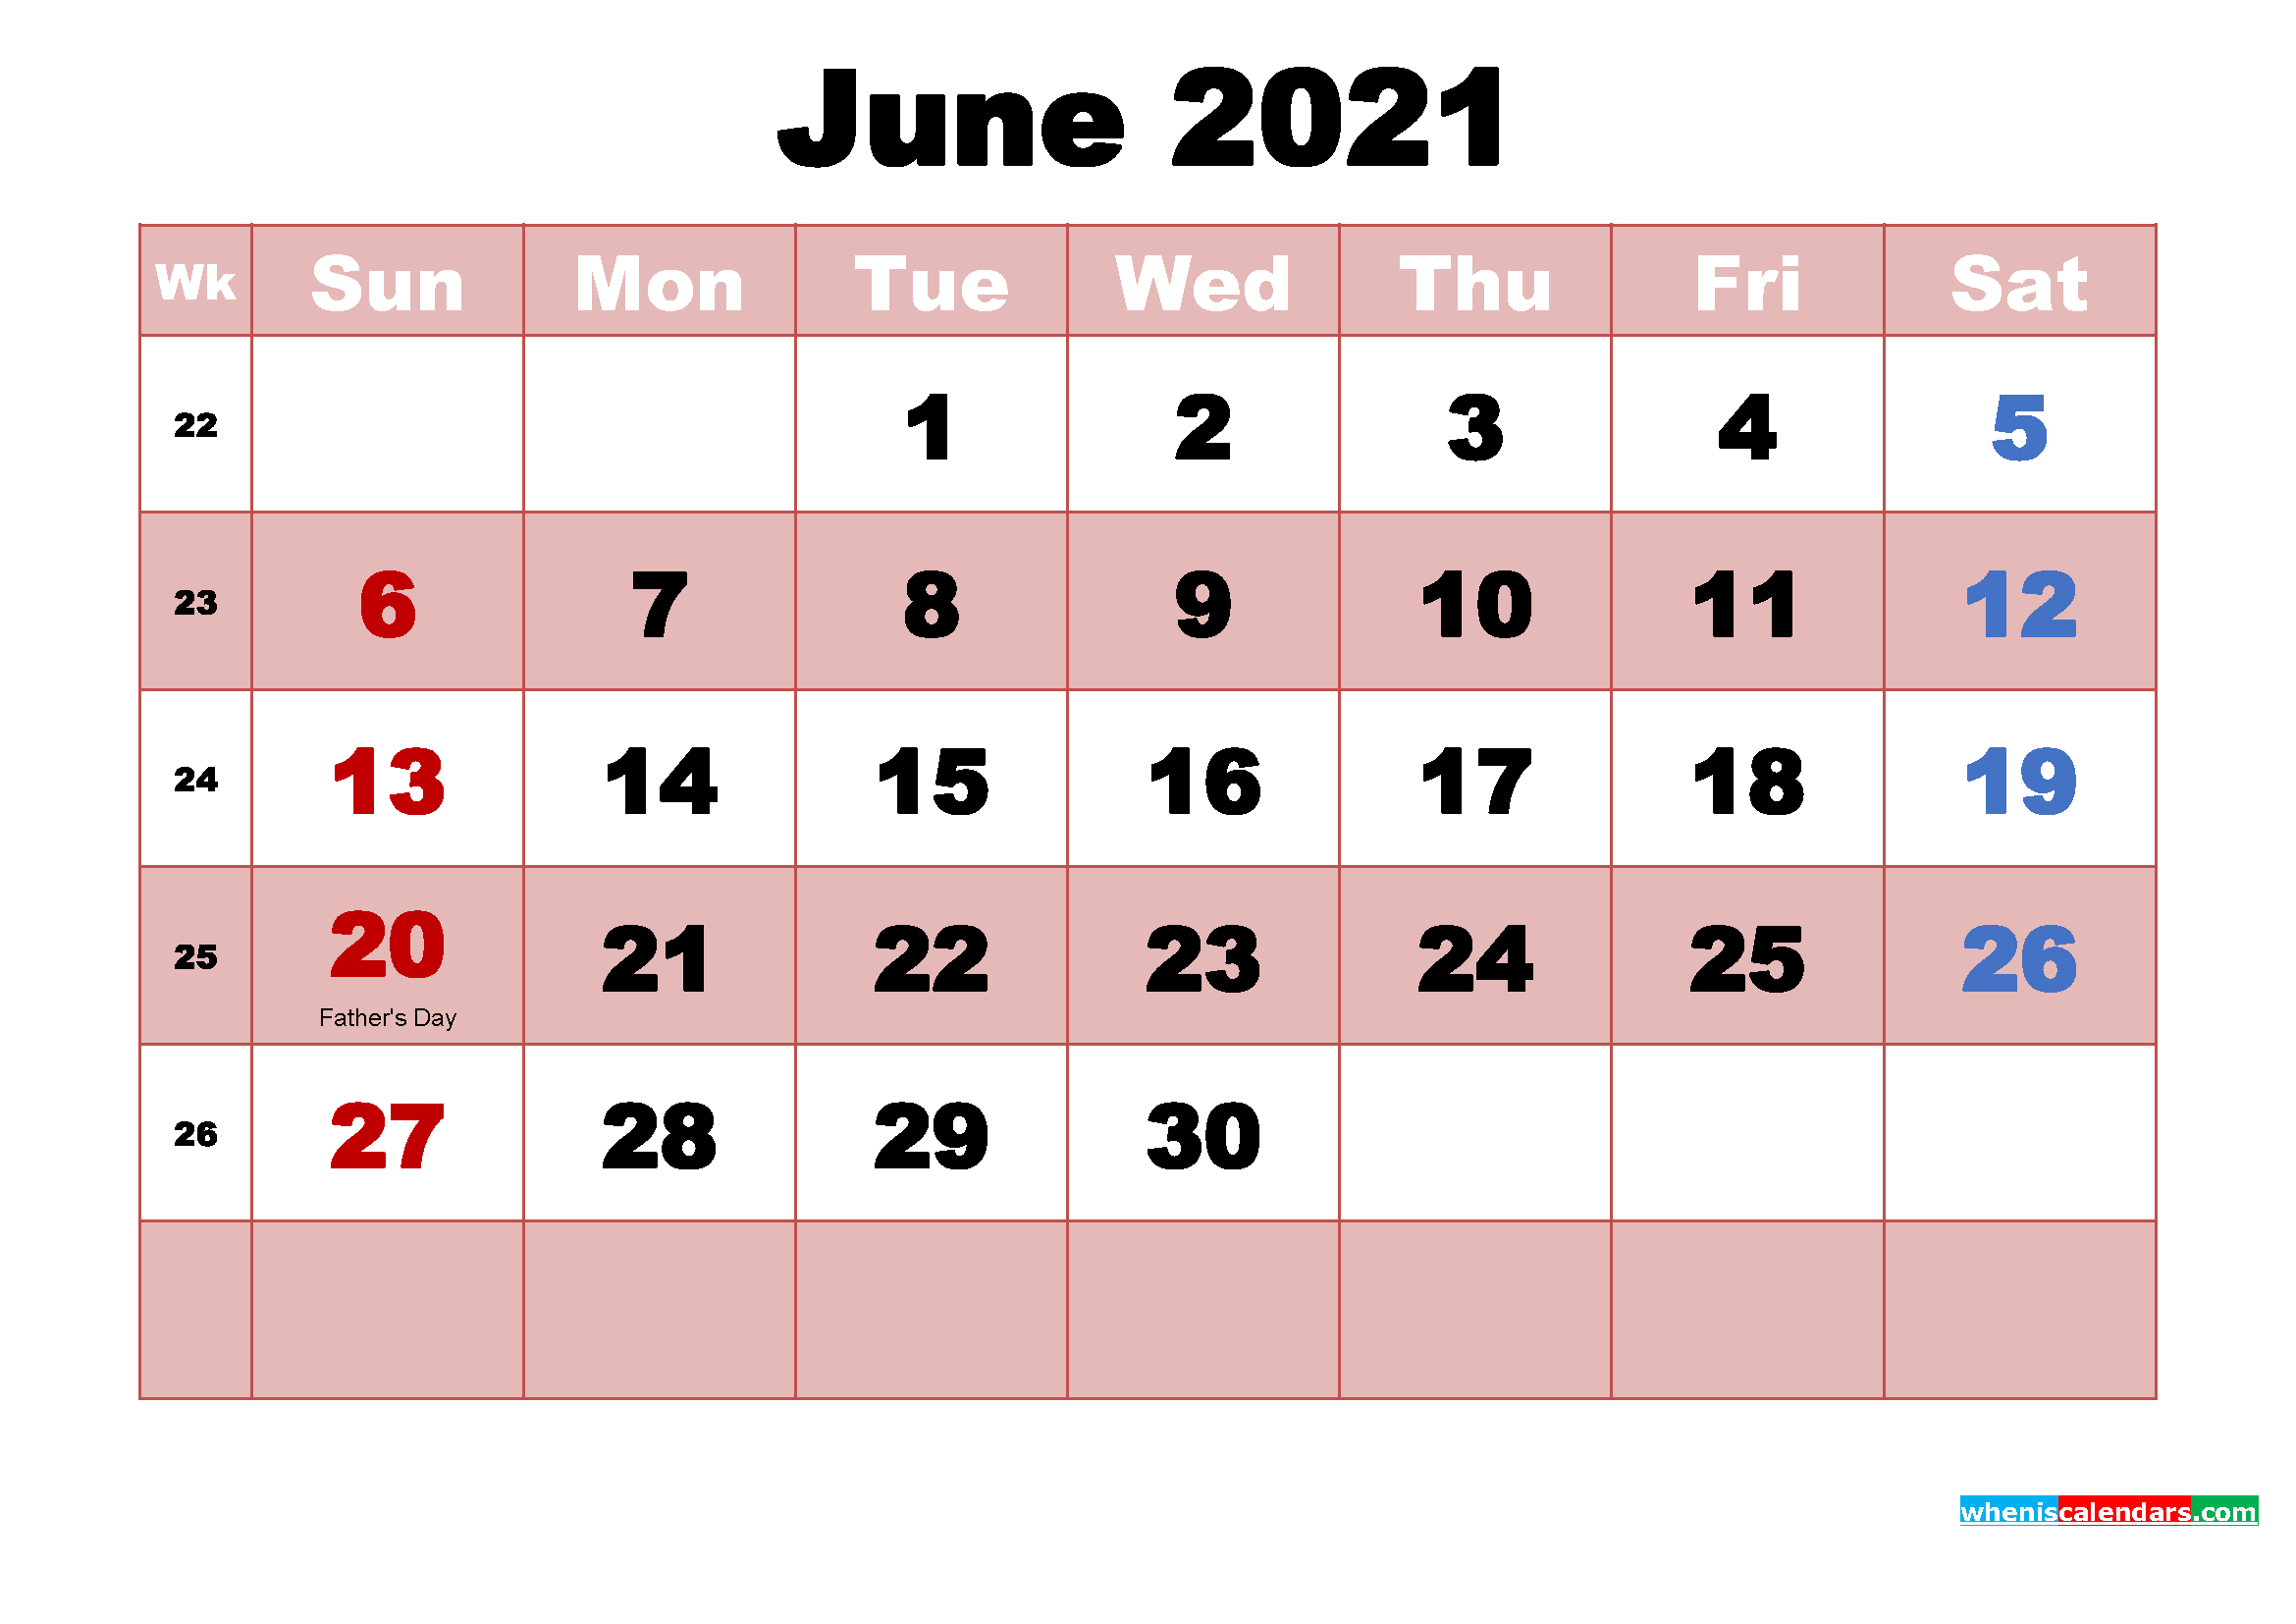 Printable June 2021 Calendar by Month